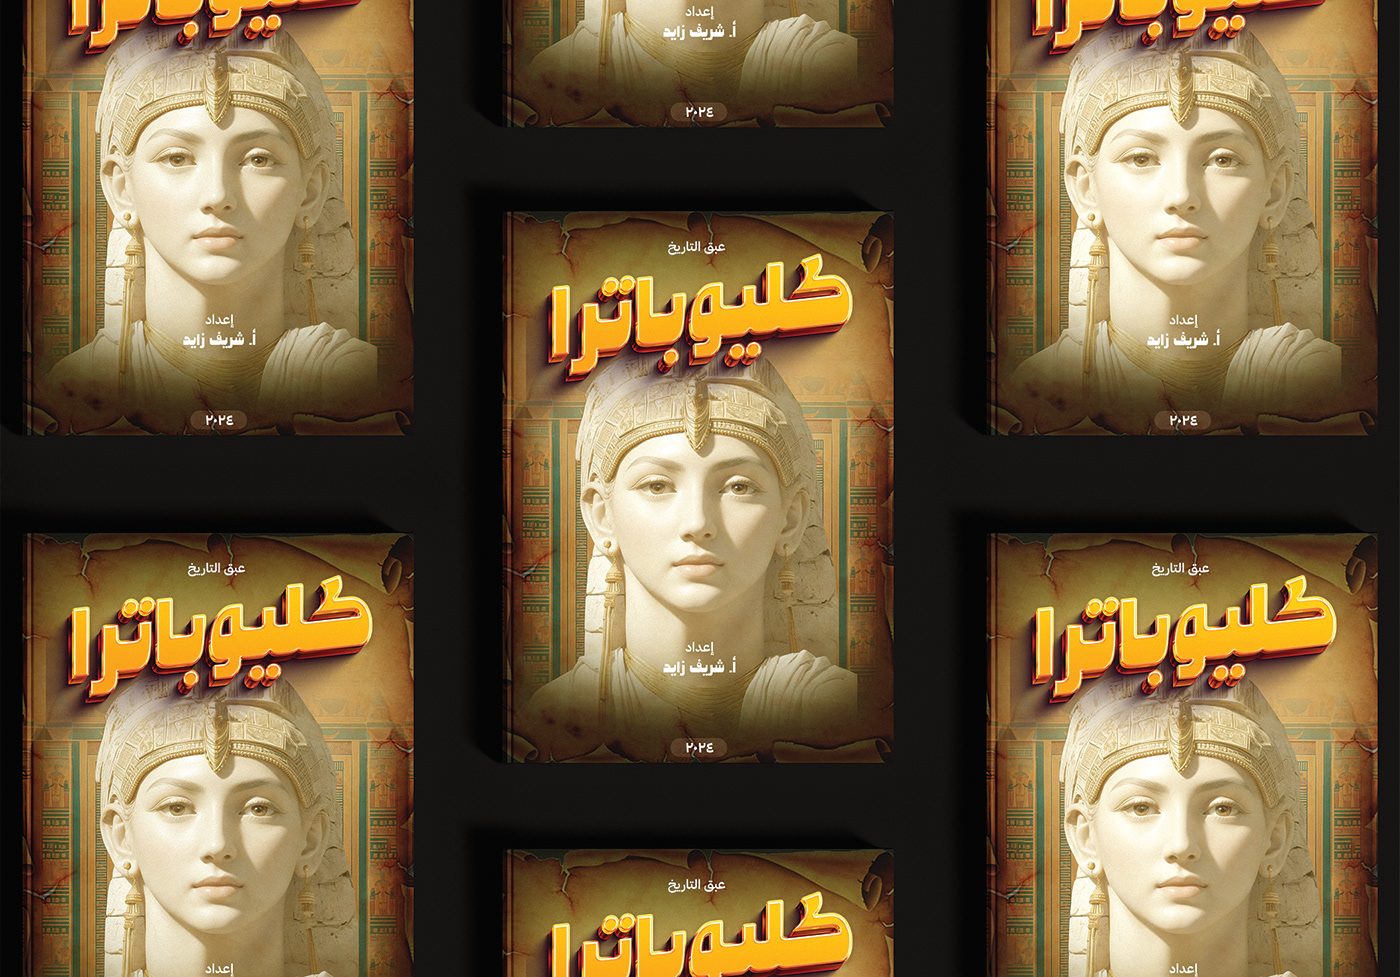 cleopatra egypt book cover cover design Cover Art artwork concept art Character design 